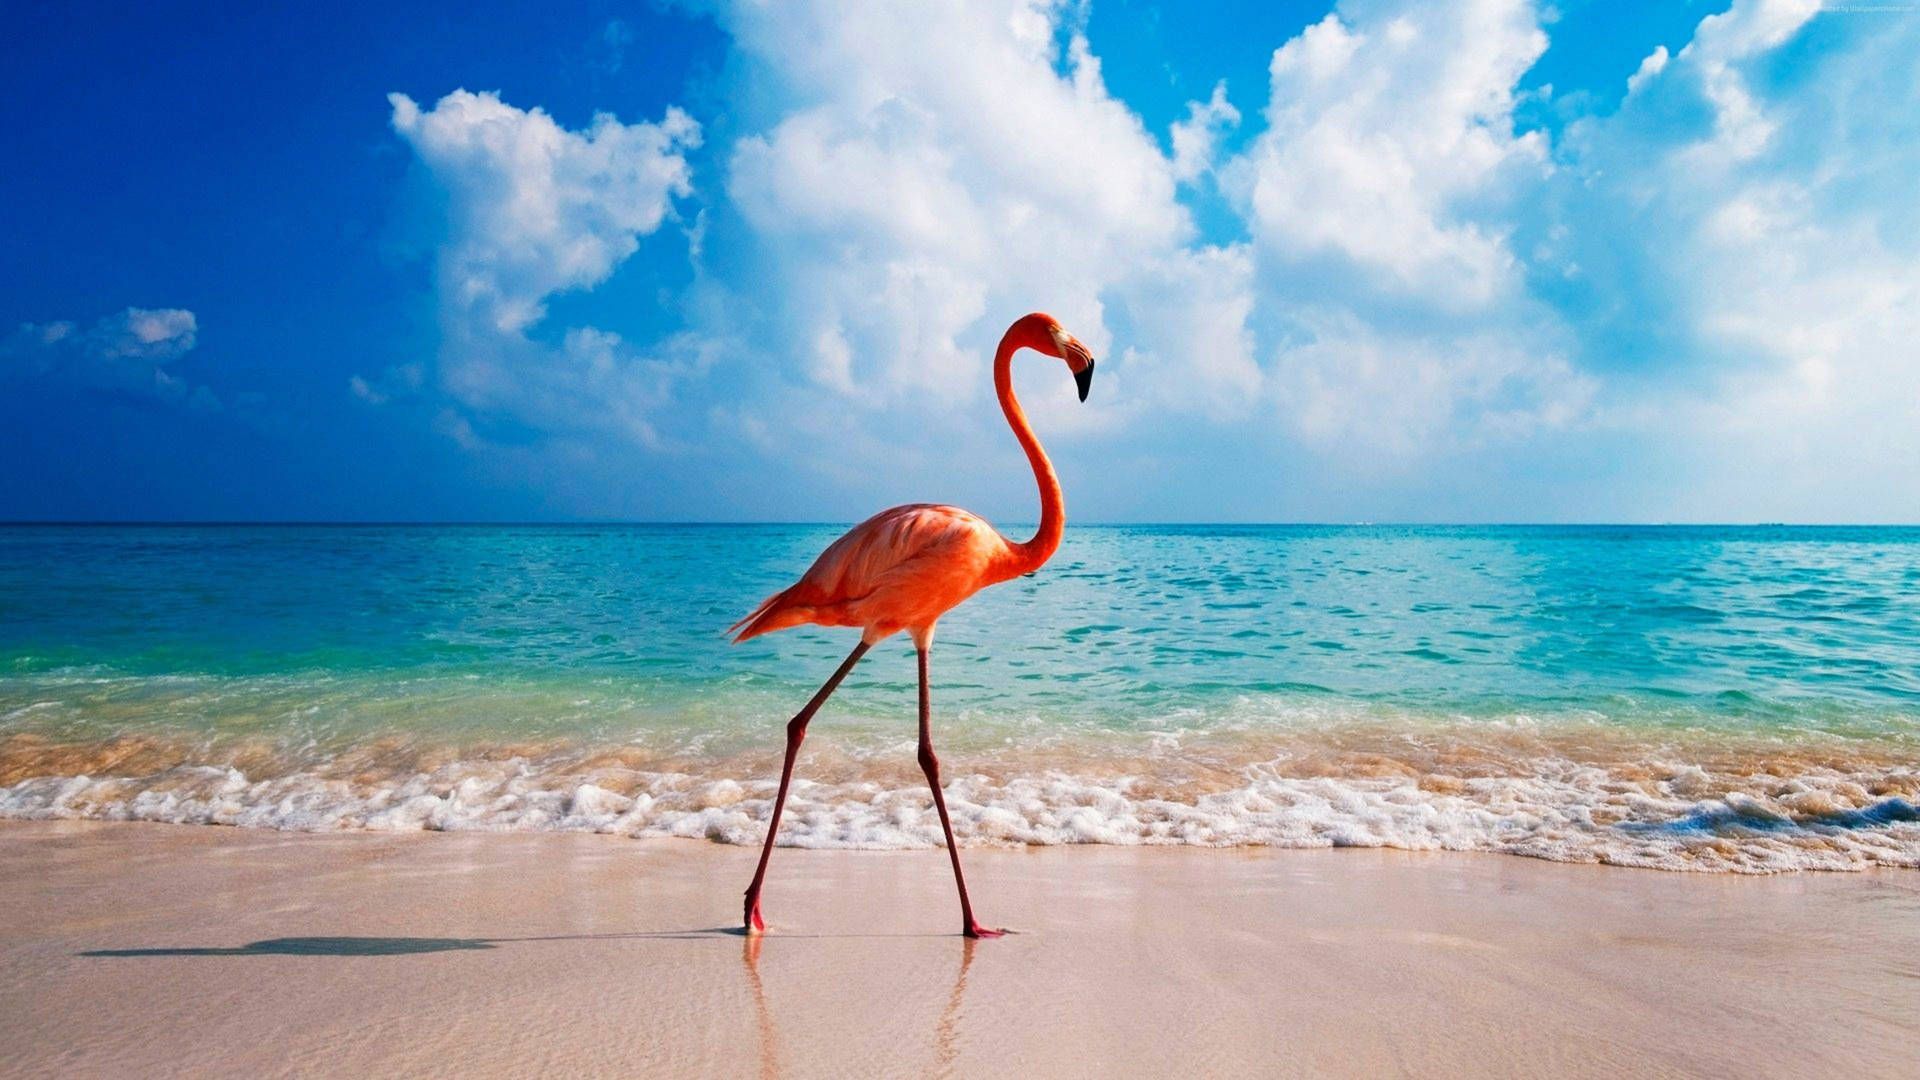 Free Flamingo Wallpaper Downloads, Flamingo Wallpaper for FREE